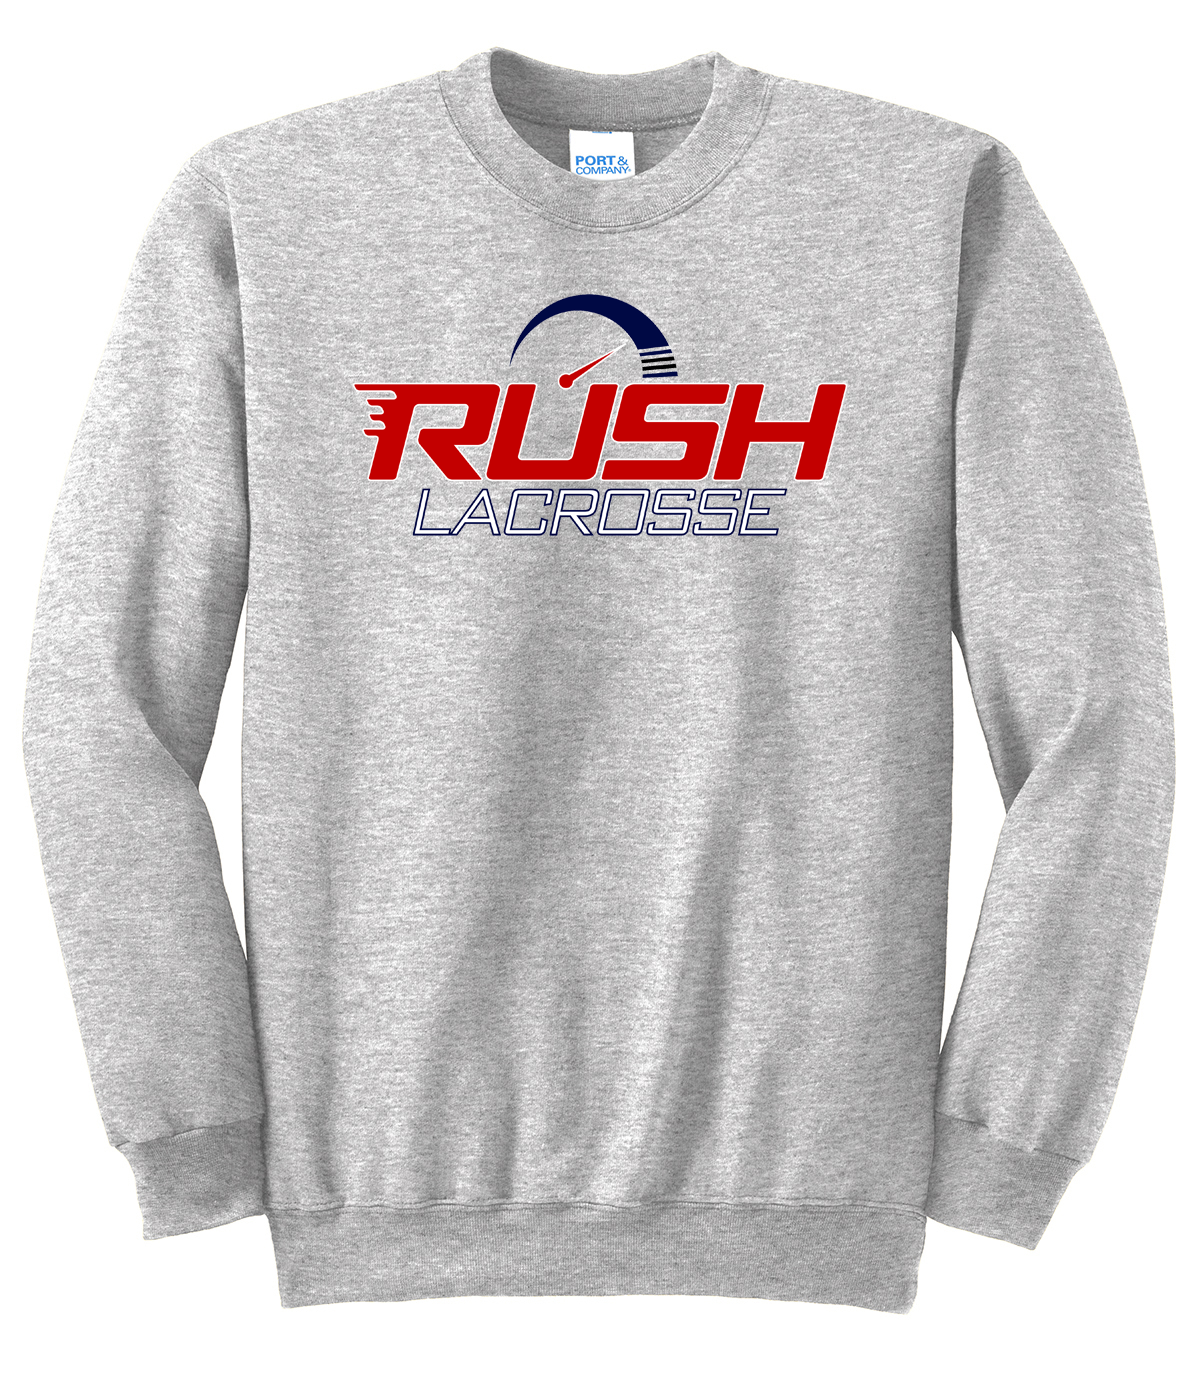 LI Rush Lacrosse Crew Neck Sweater